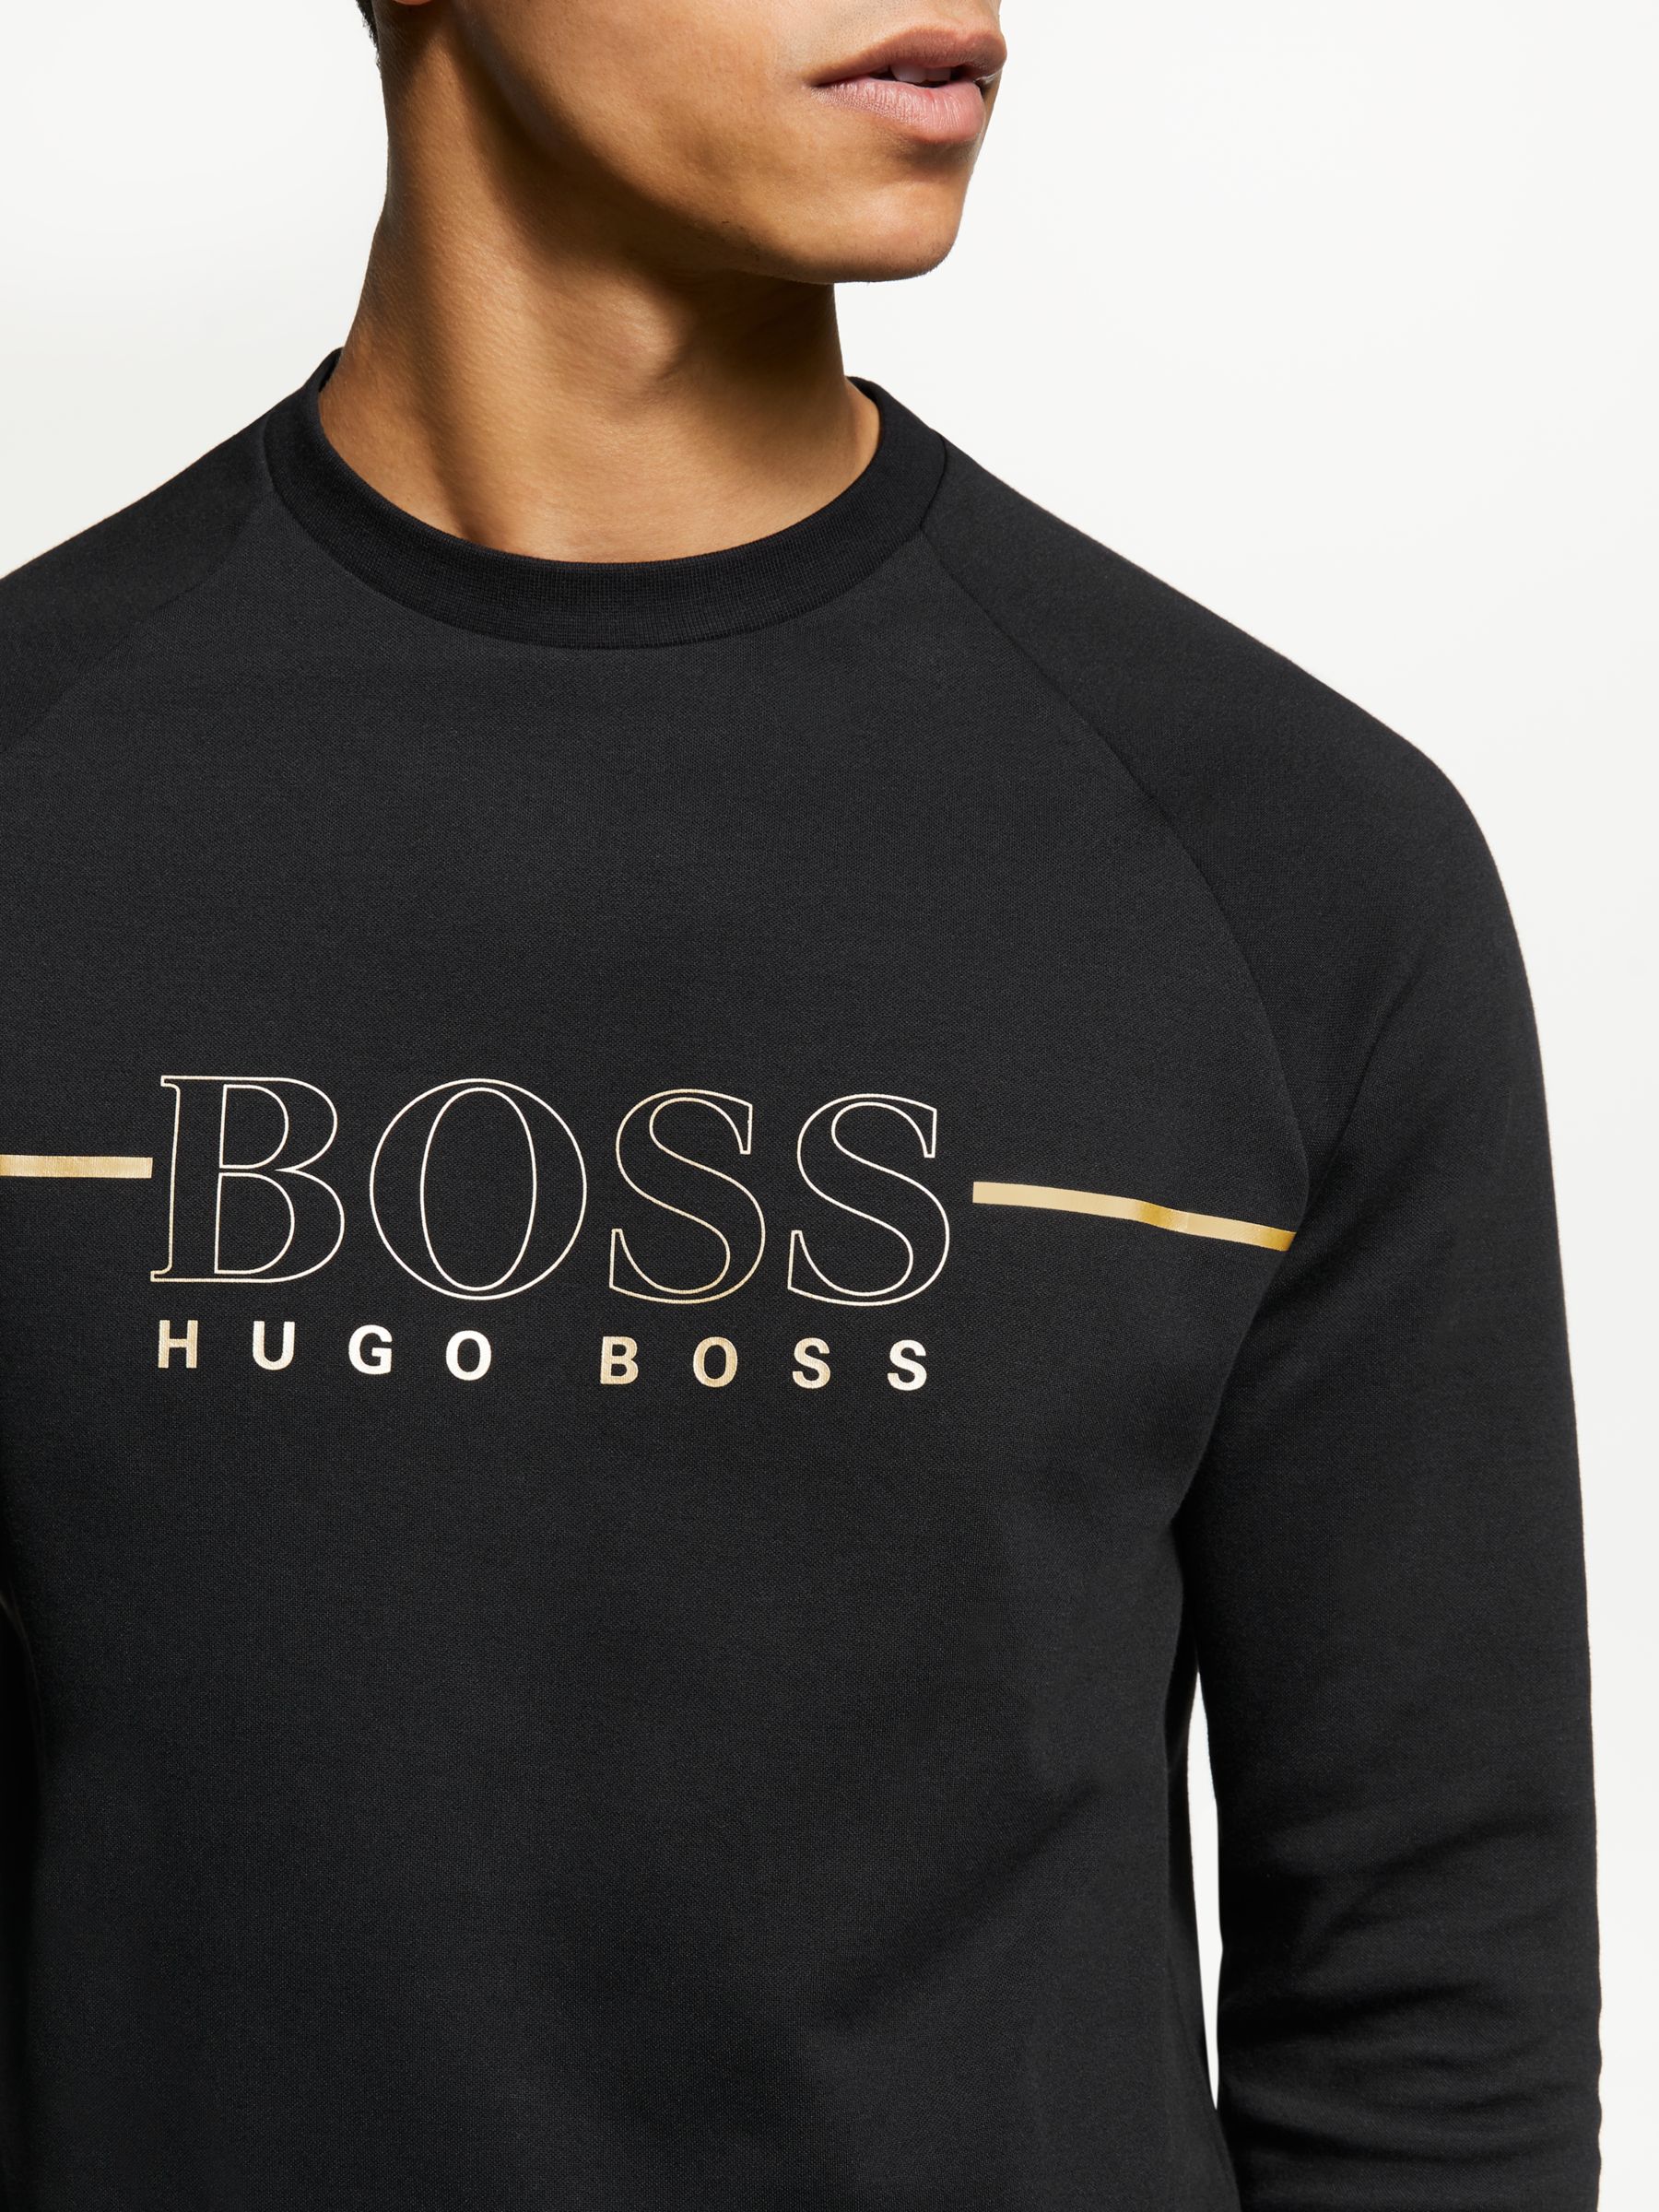 mens black hugo boss sweatshirt